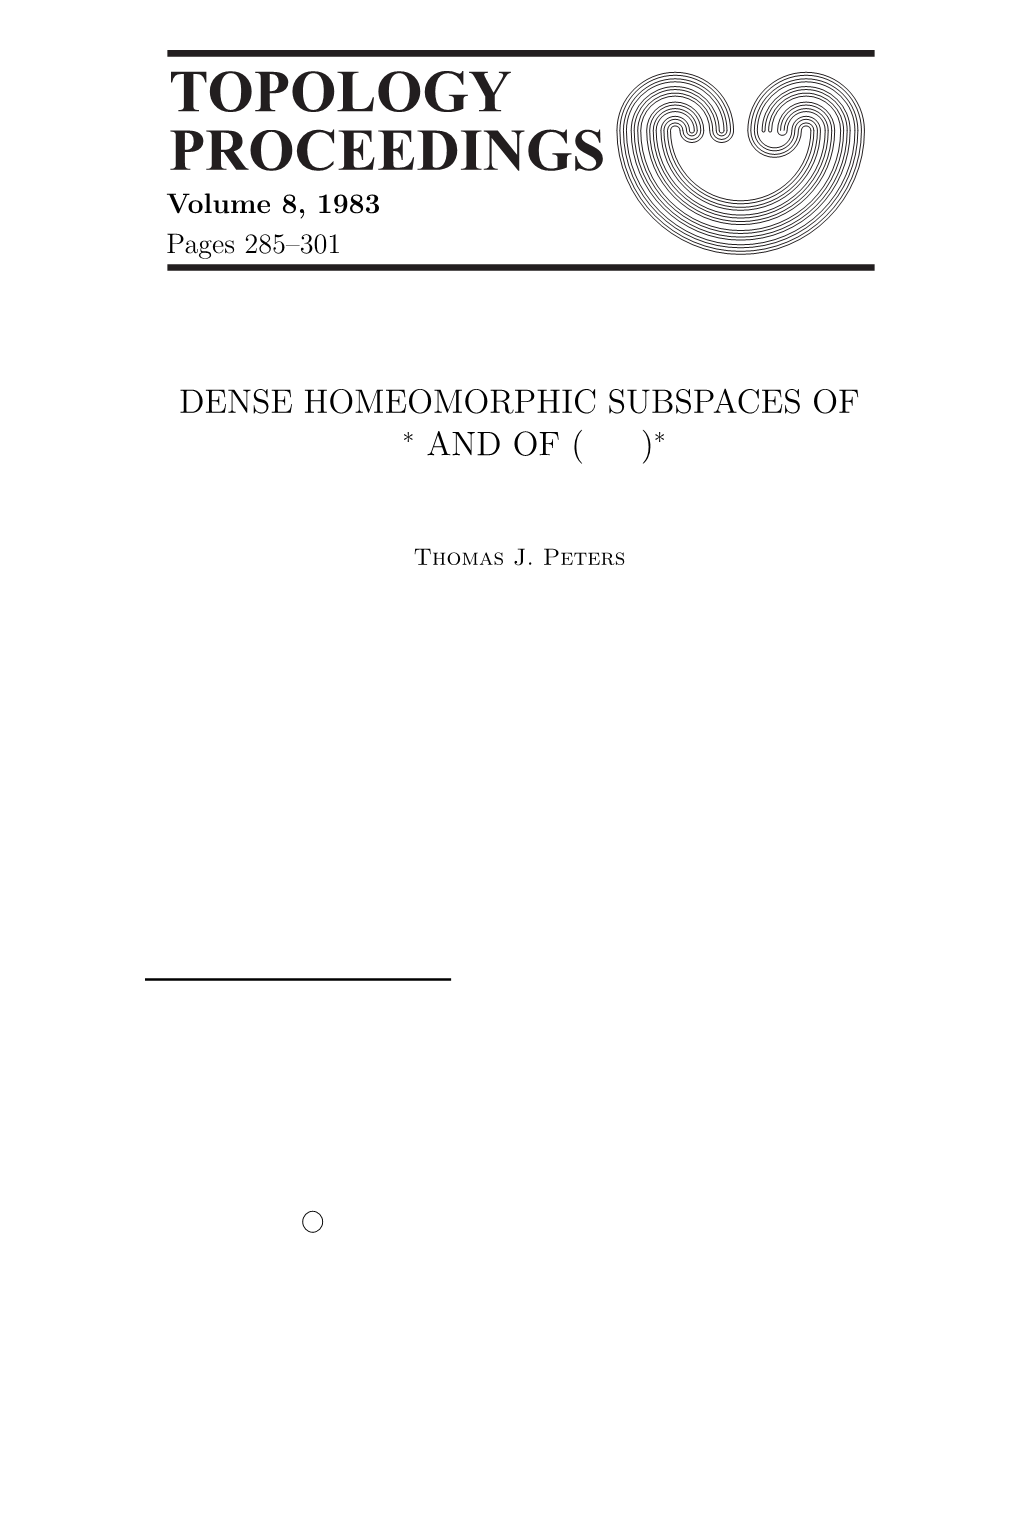 Topology Proceedings 8 (1983) Pp. 285-301: DENSE